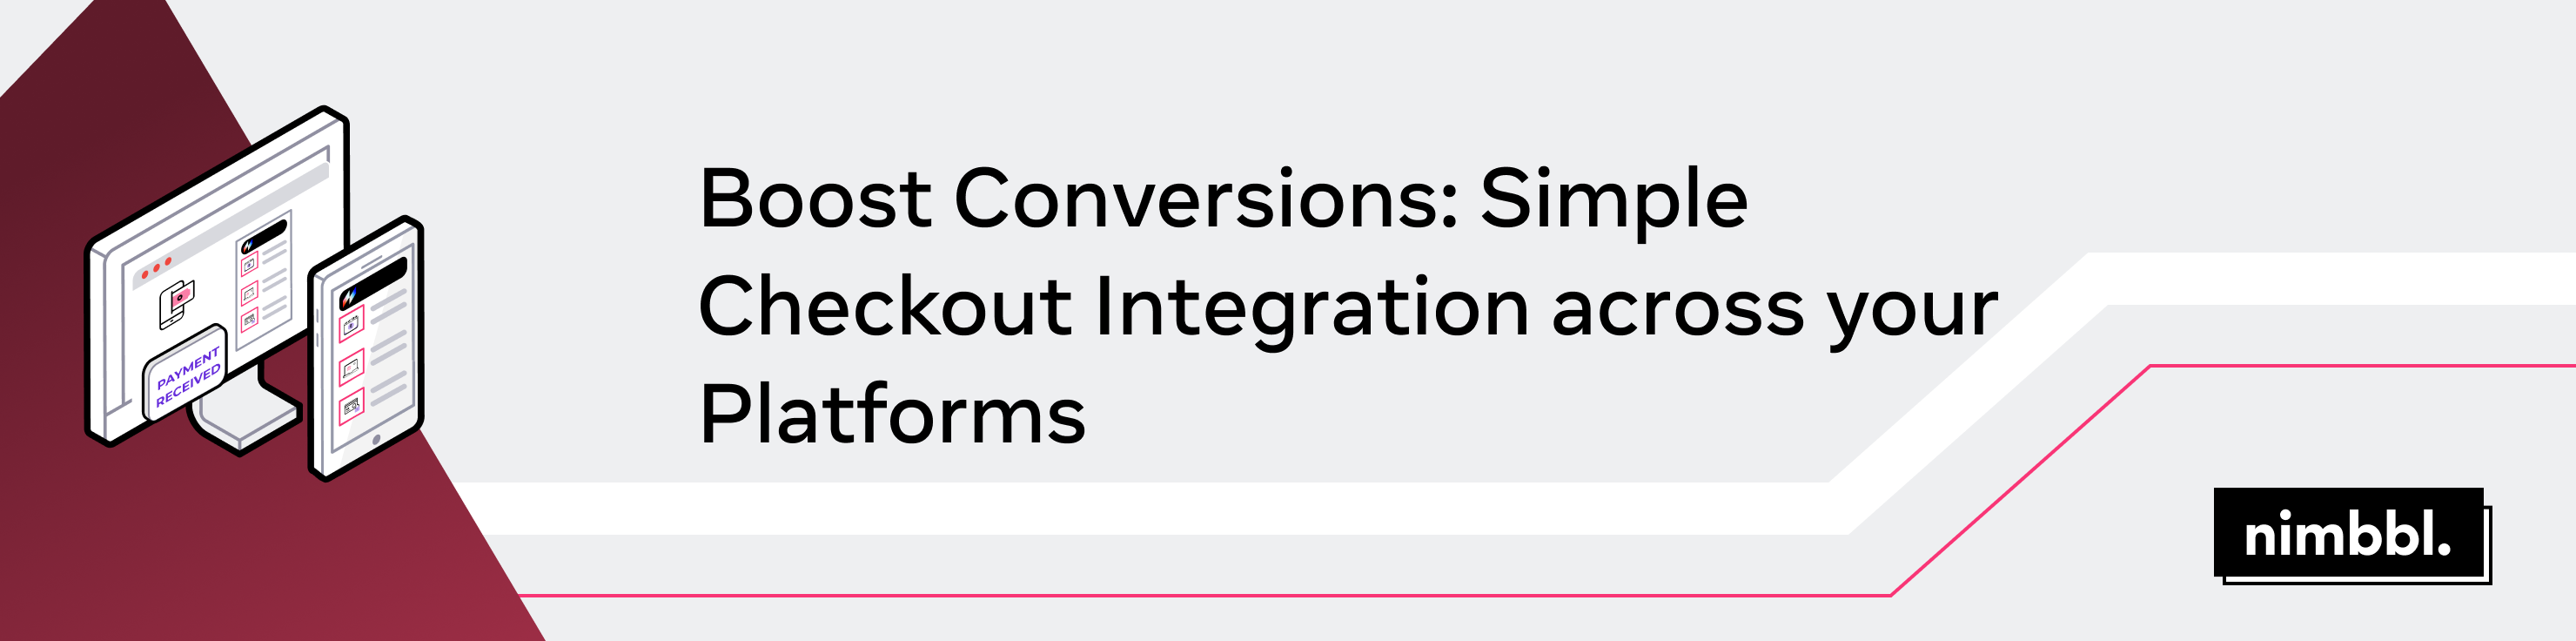 Boost Conversions: Simple Checkout Integration Across Your Platforms